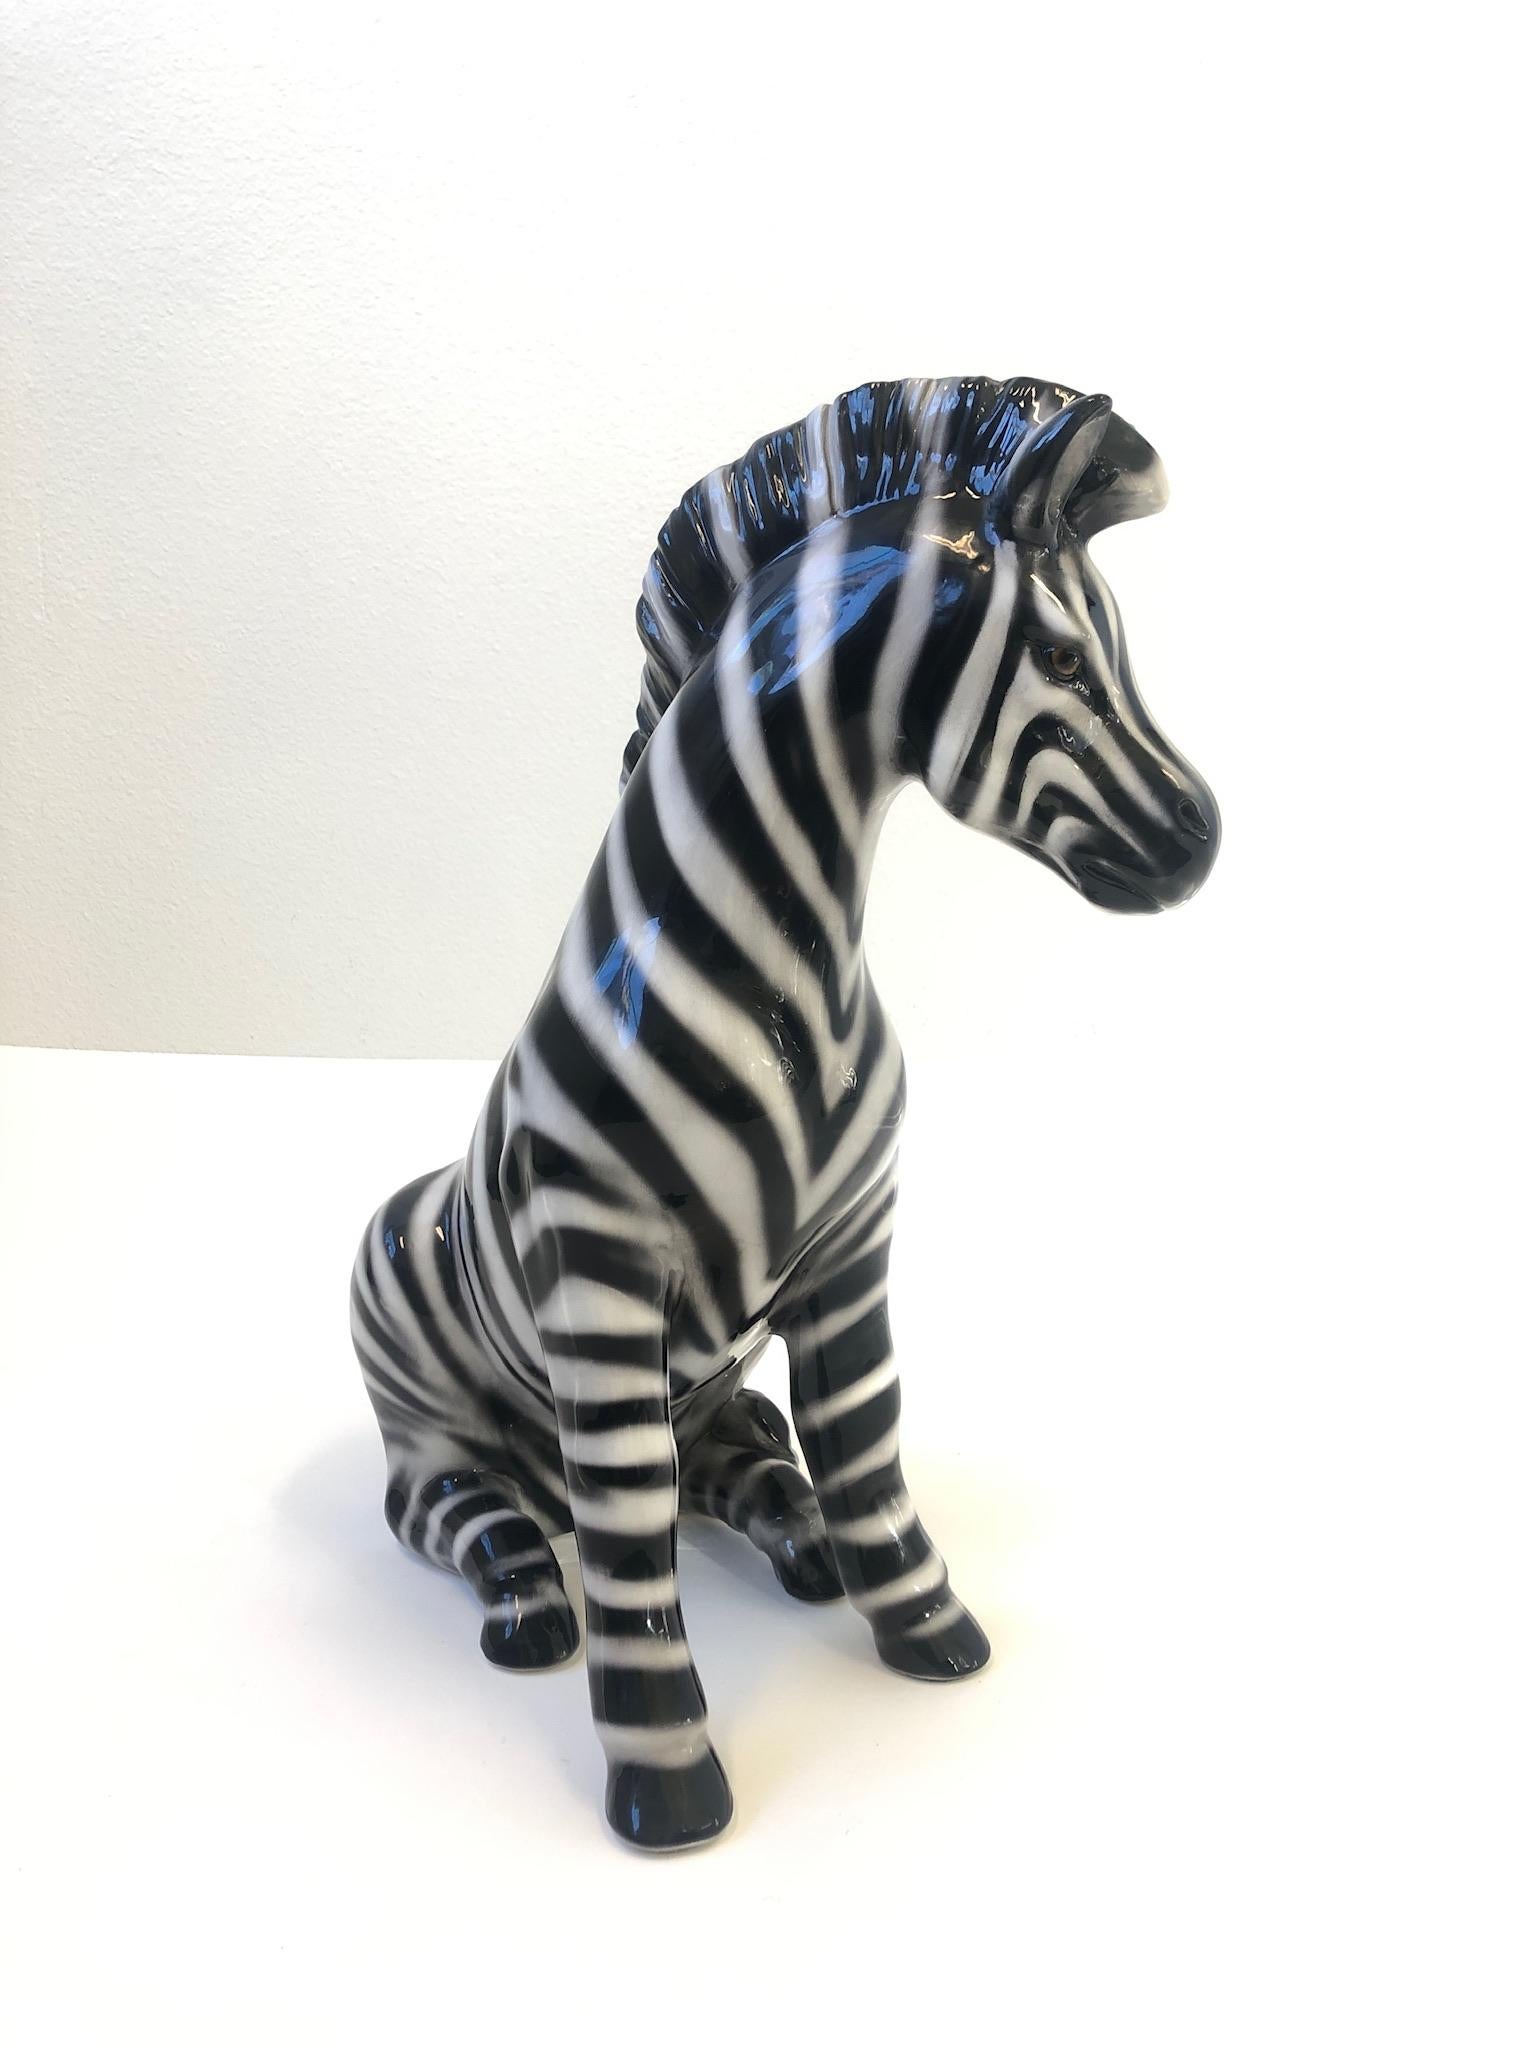 Glazed Italian Ceramic Zebra Sculpture